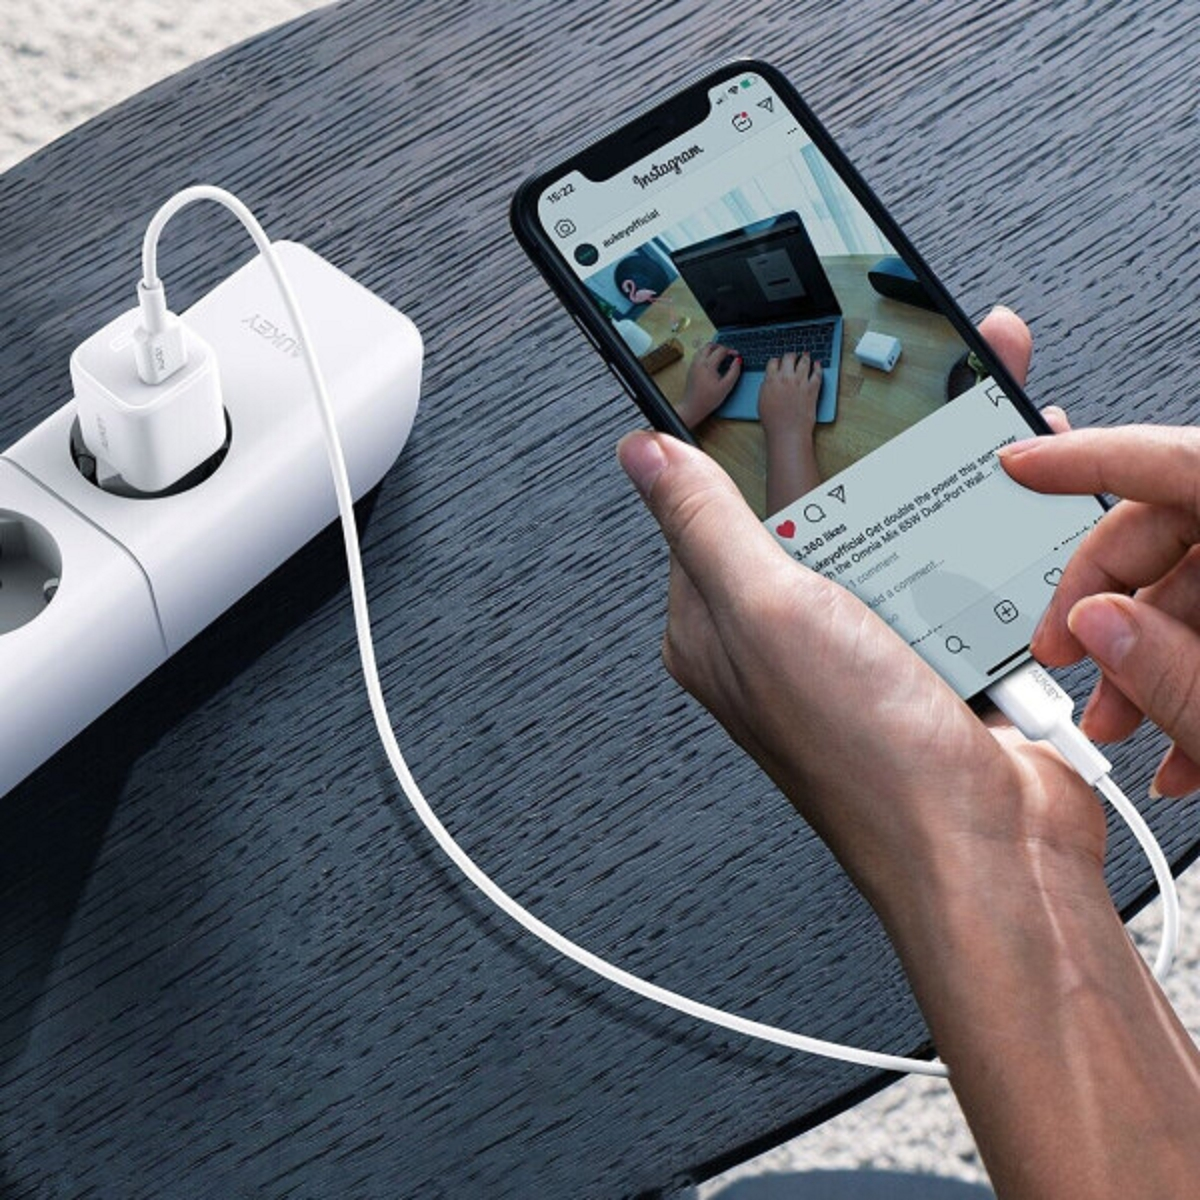 AUKEY PA-B1-Whi Ladegerät Weiß und Android, Apple